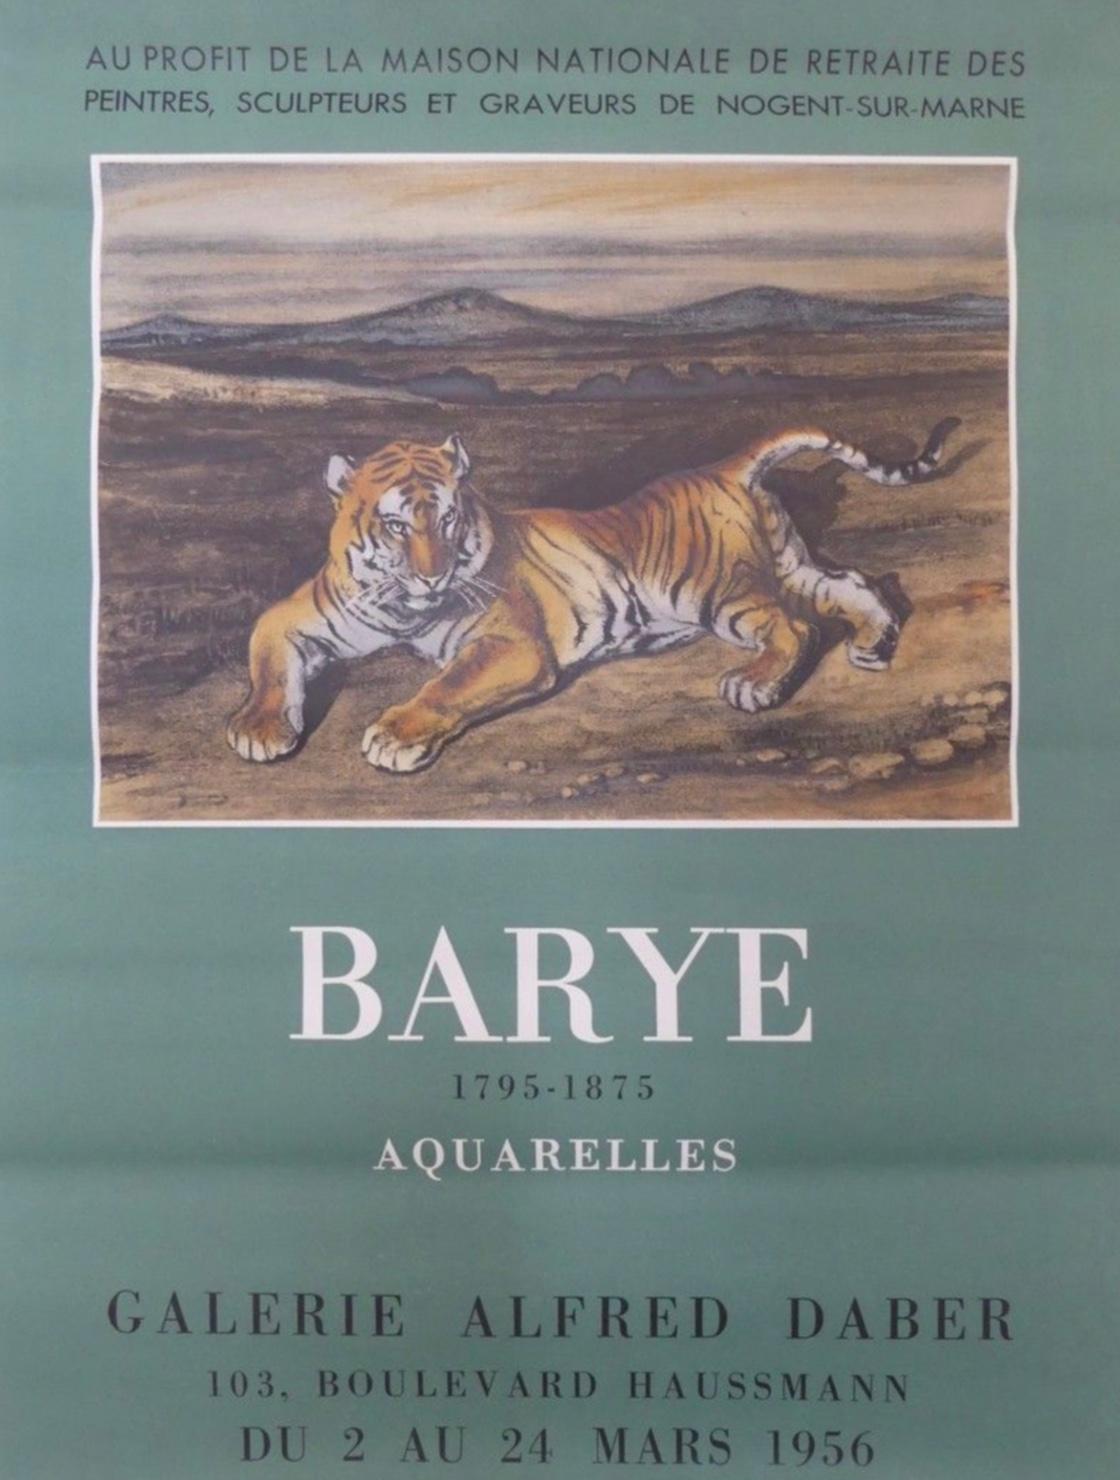 Antoine-Louis Barye Original Vintage French Poster, Galerie Alfred Daber, 1956